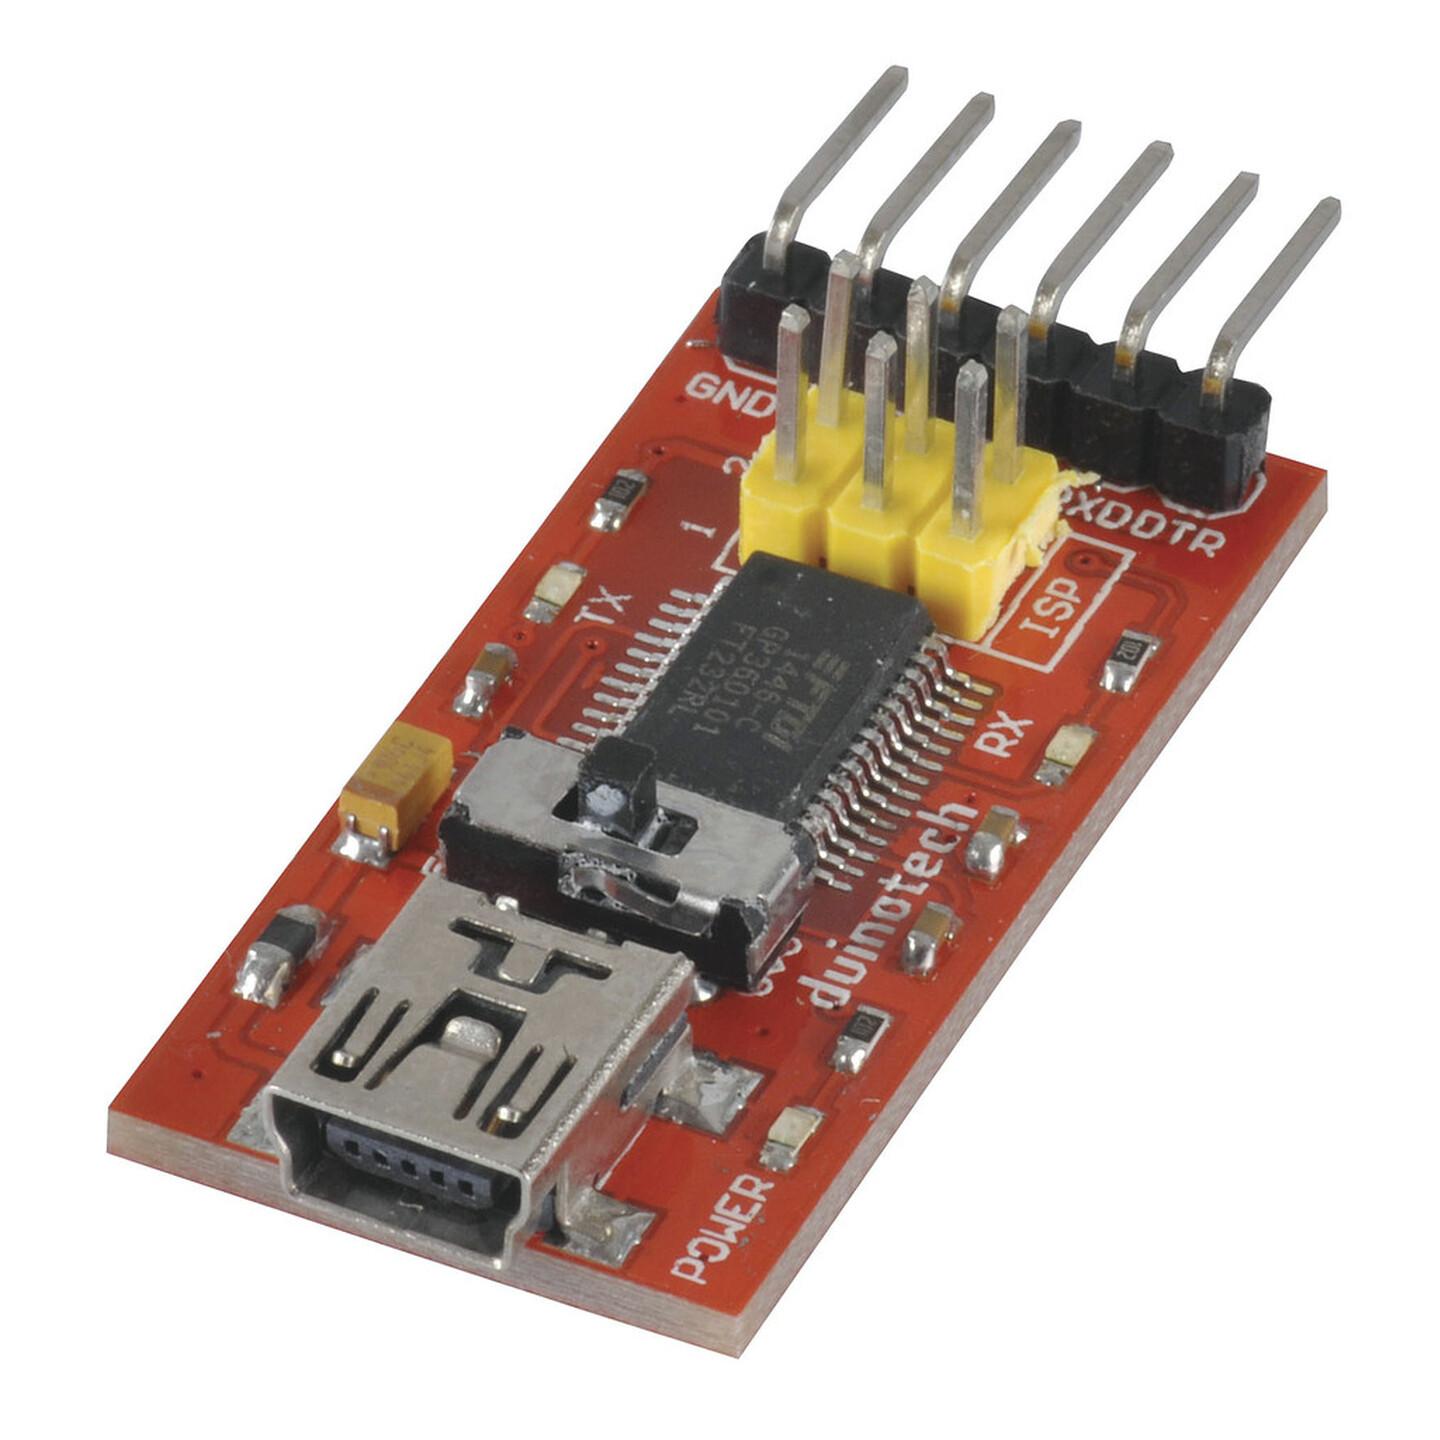 Duinotech Arduino Compatible USB to Serial Adaptor